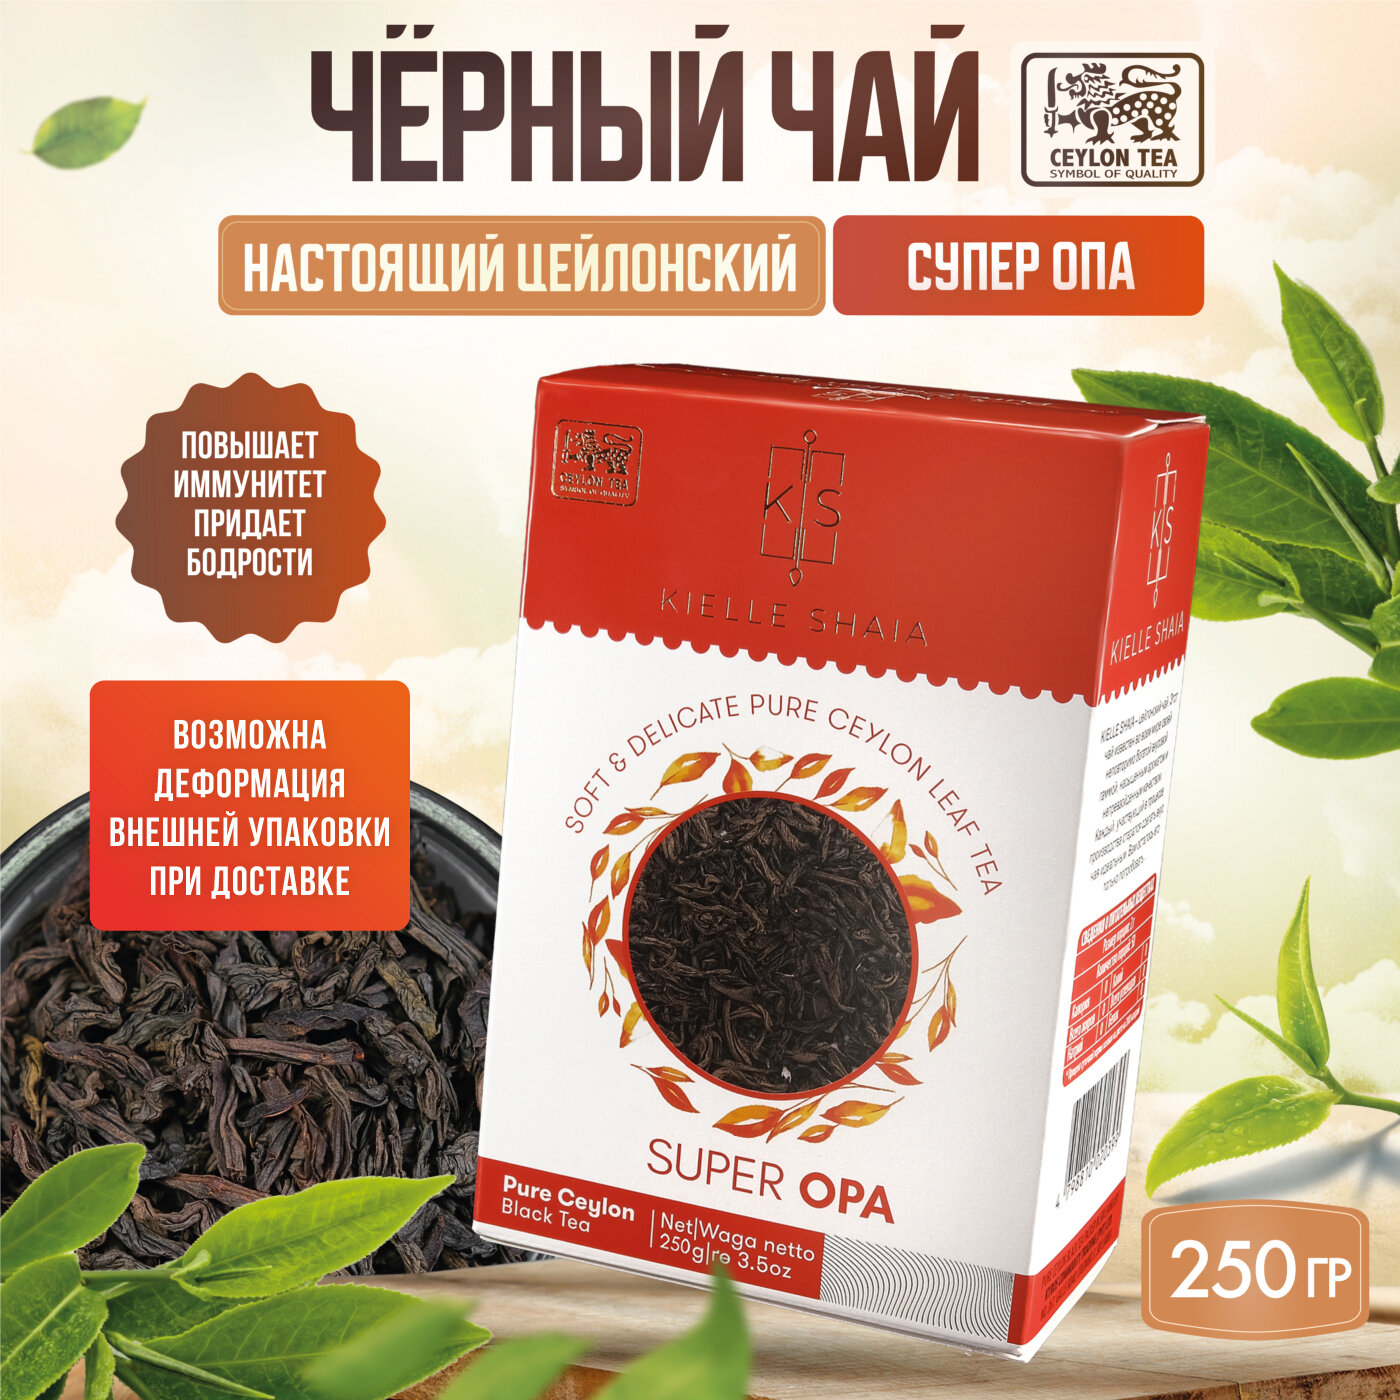 Чай черный листовой цейлонский SUPER OPA KIELLE SHAIA, 250 г